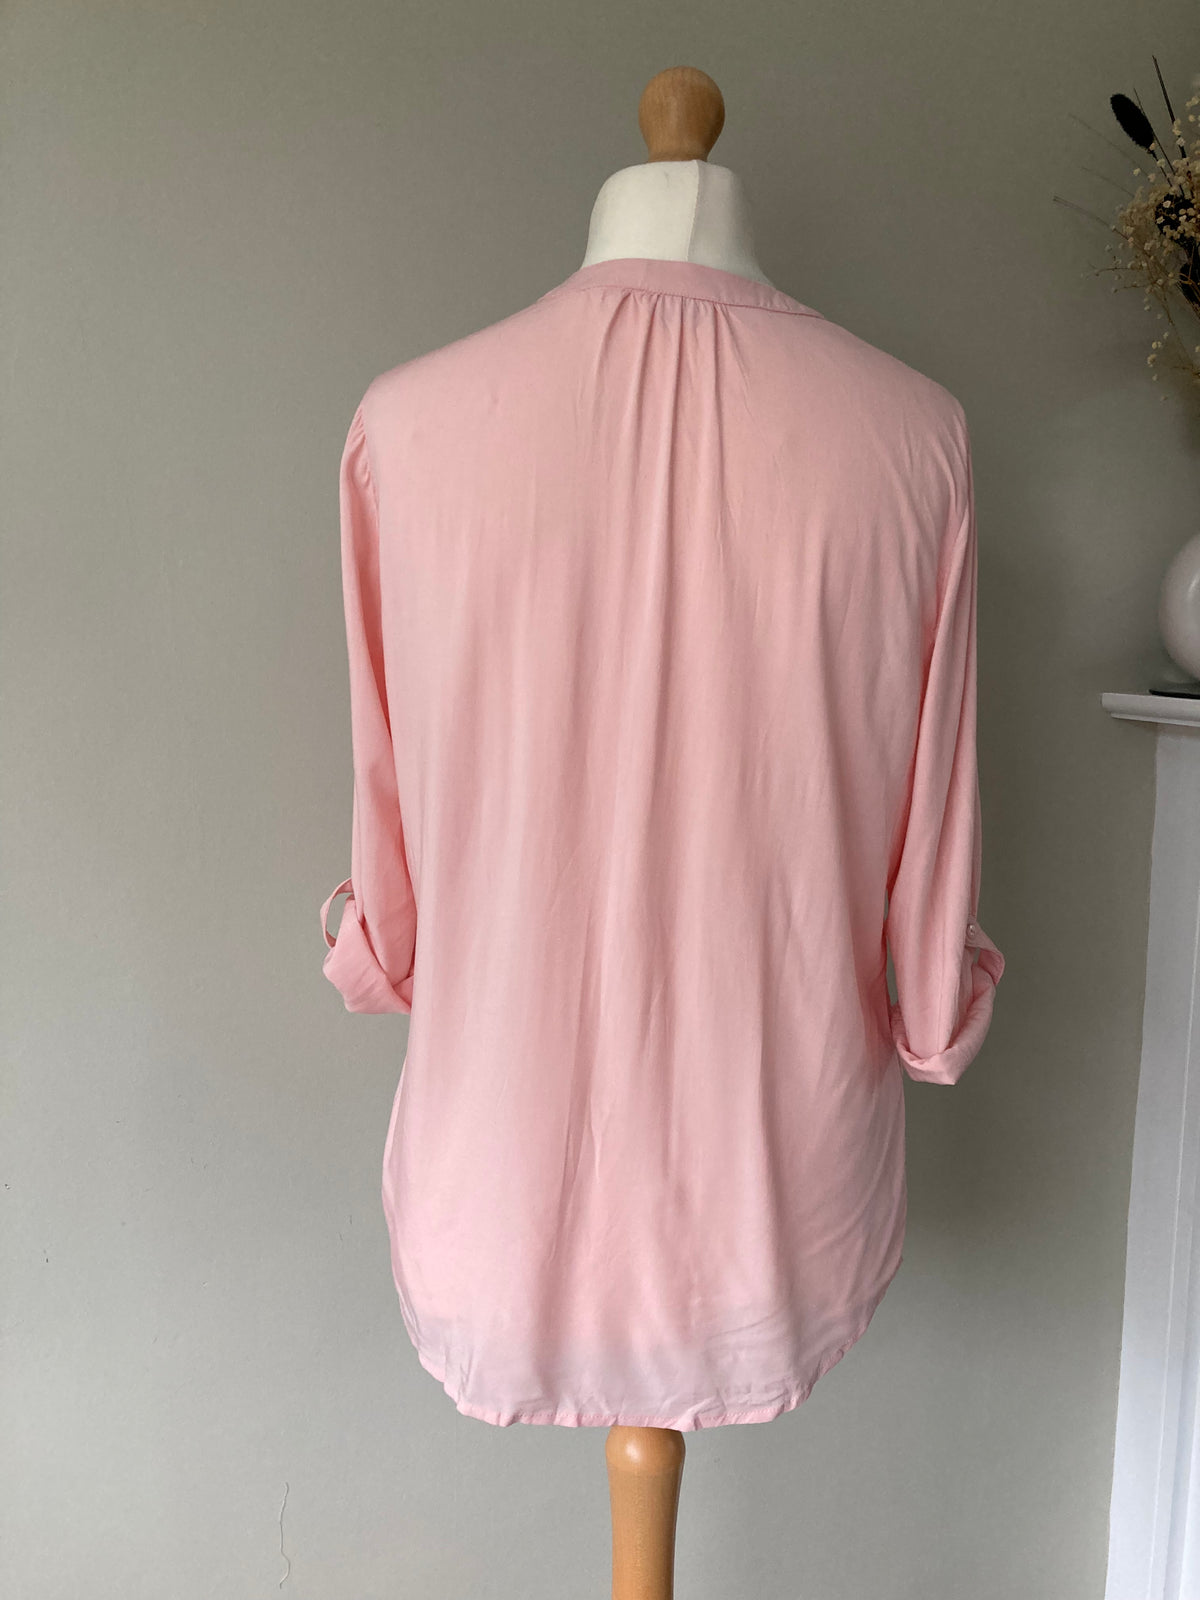 Pink blouse by Lascana - Size 12